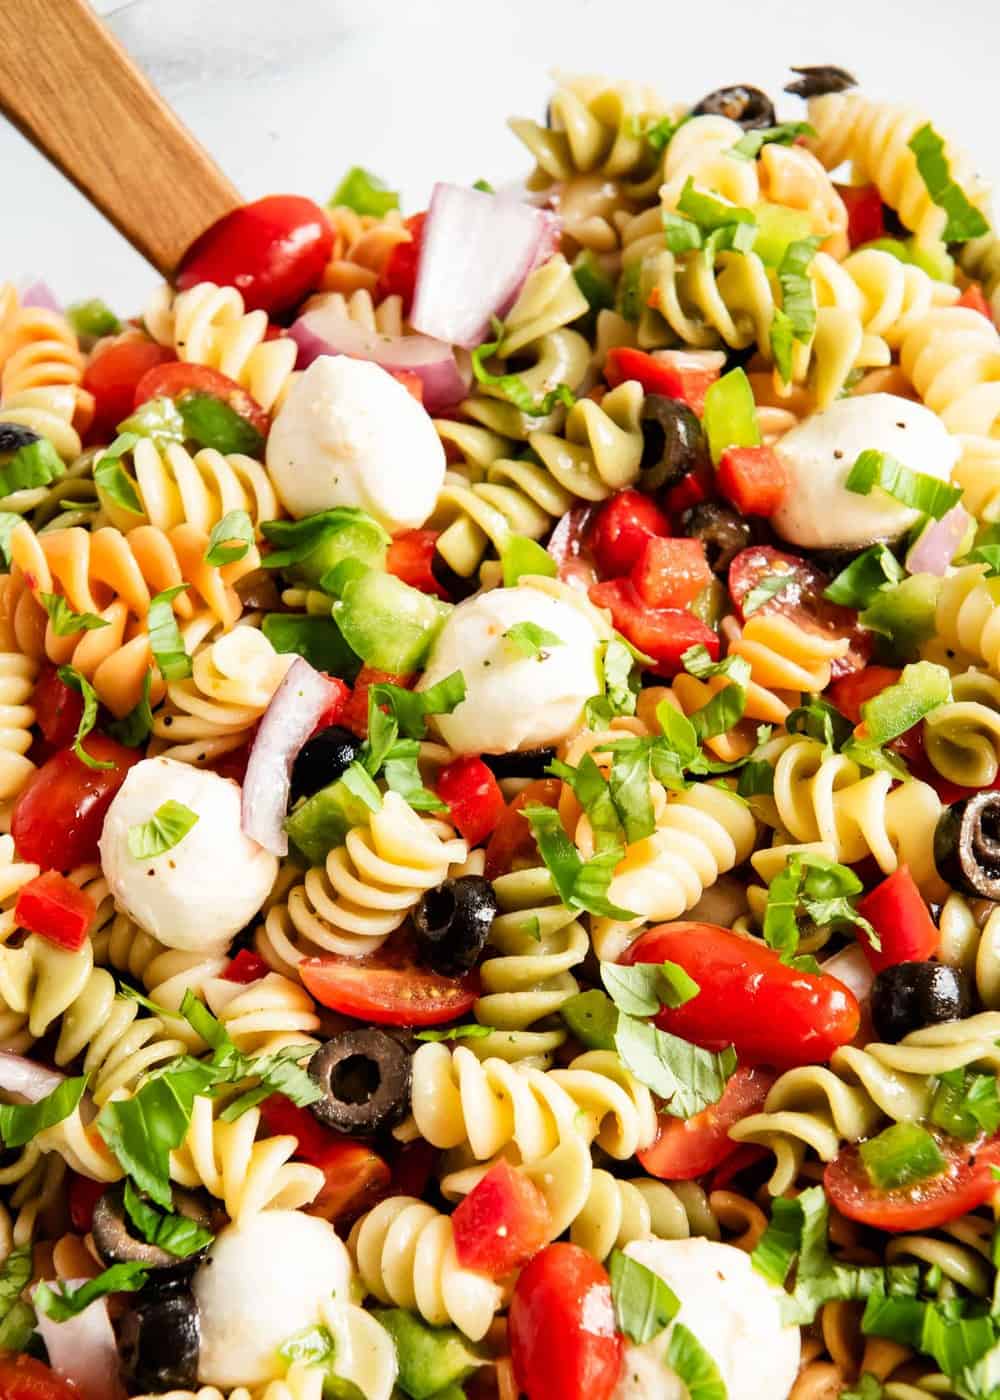 EASY Pasta Salad Recipe with Italian Dressing